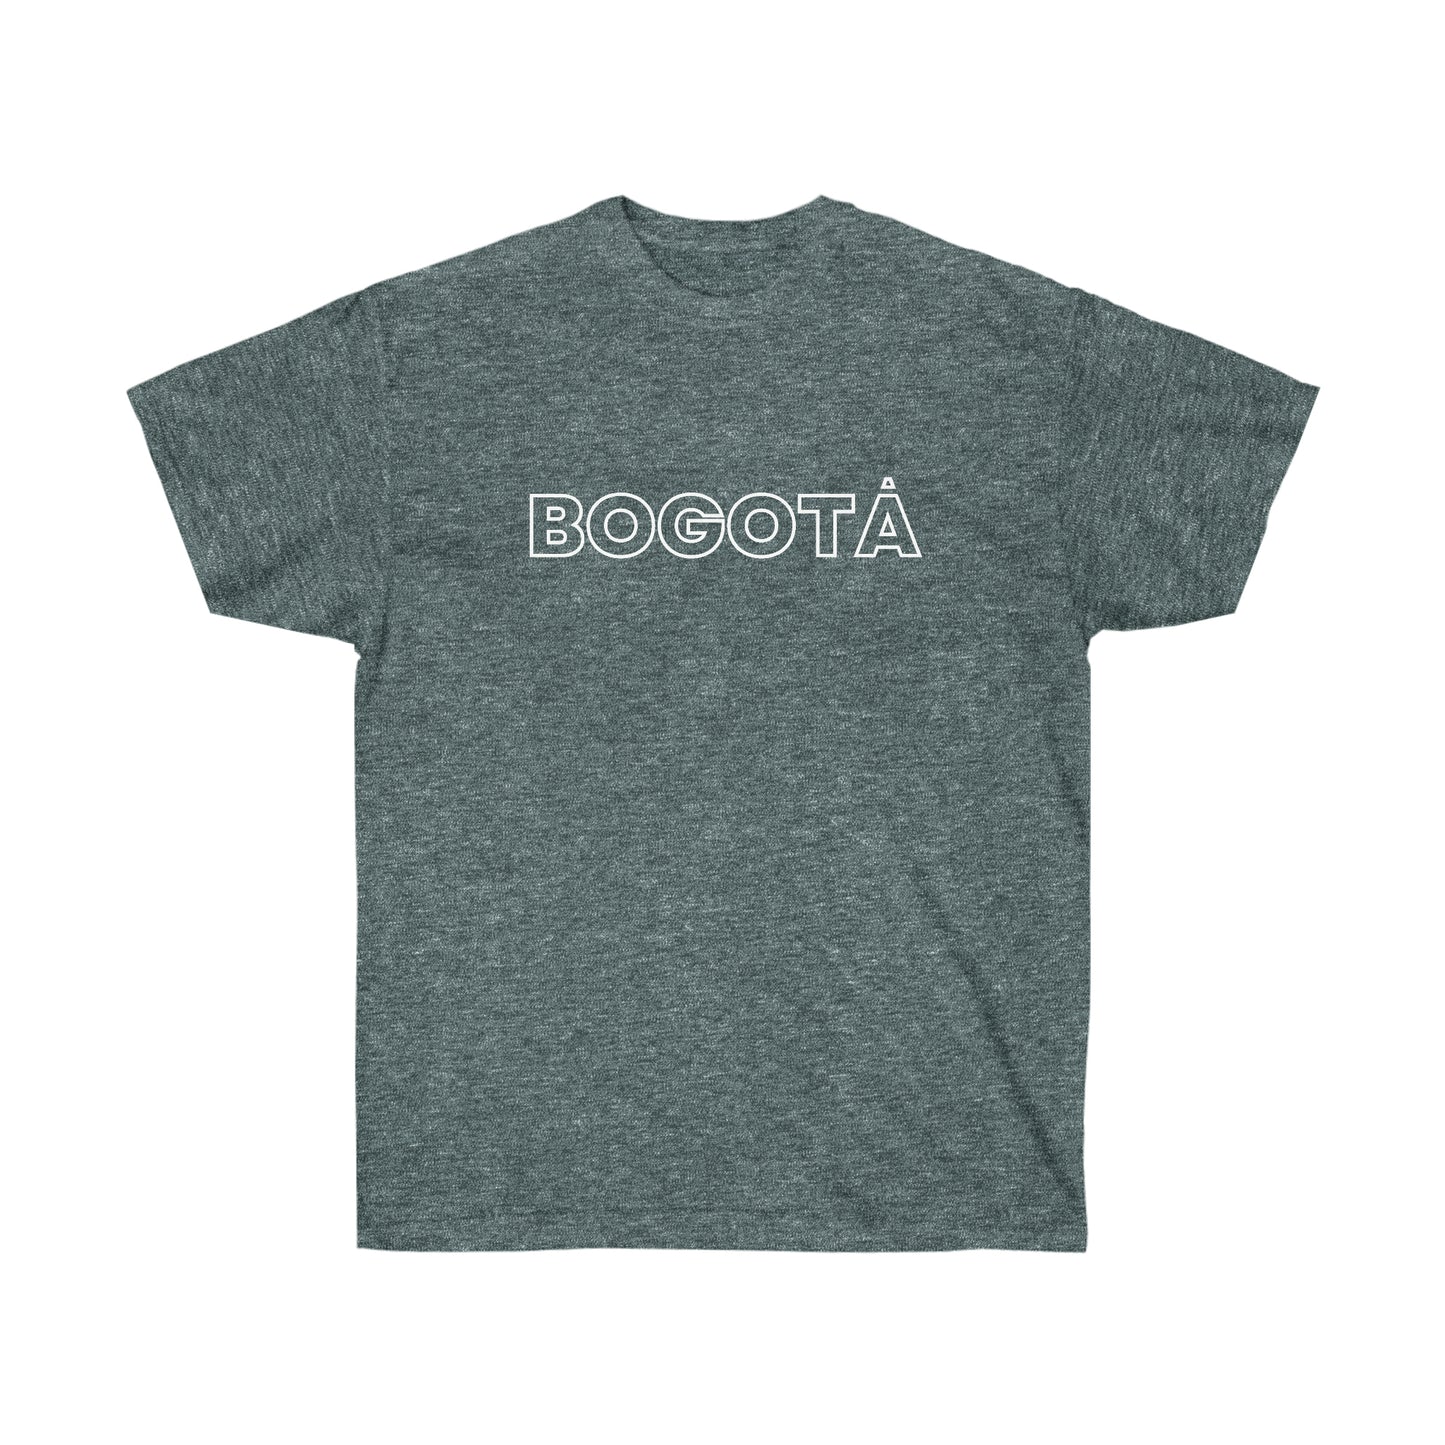 BOGOTA - Unisex Ultra Cotton Tee